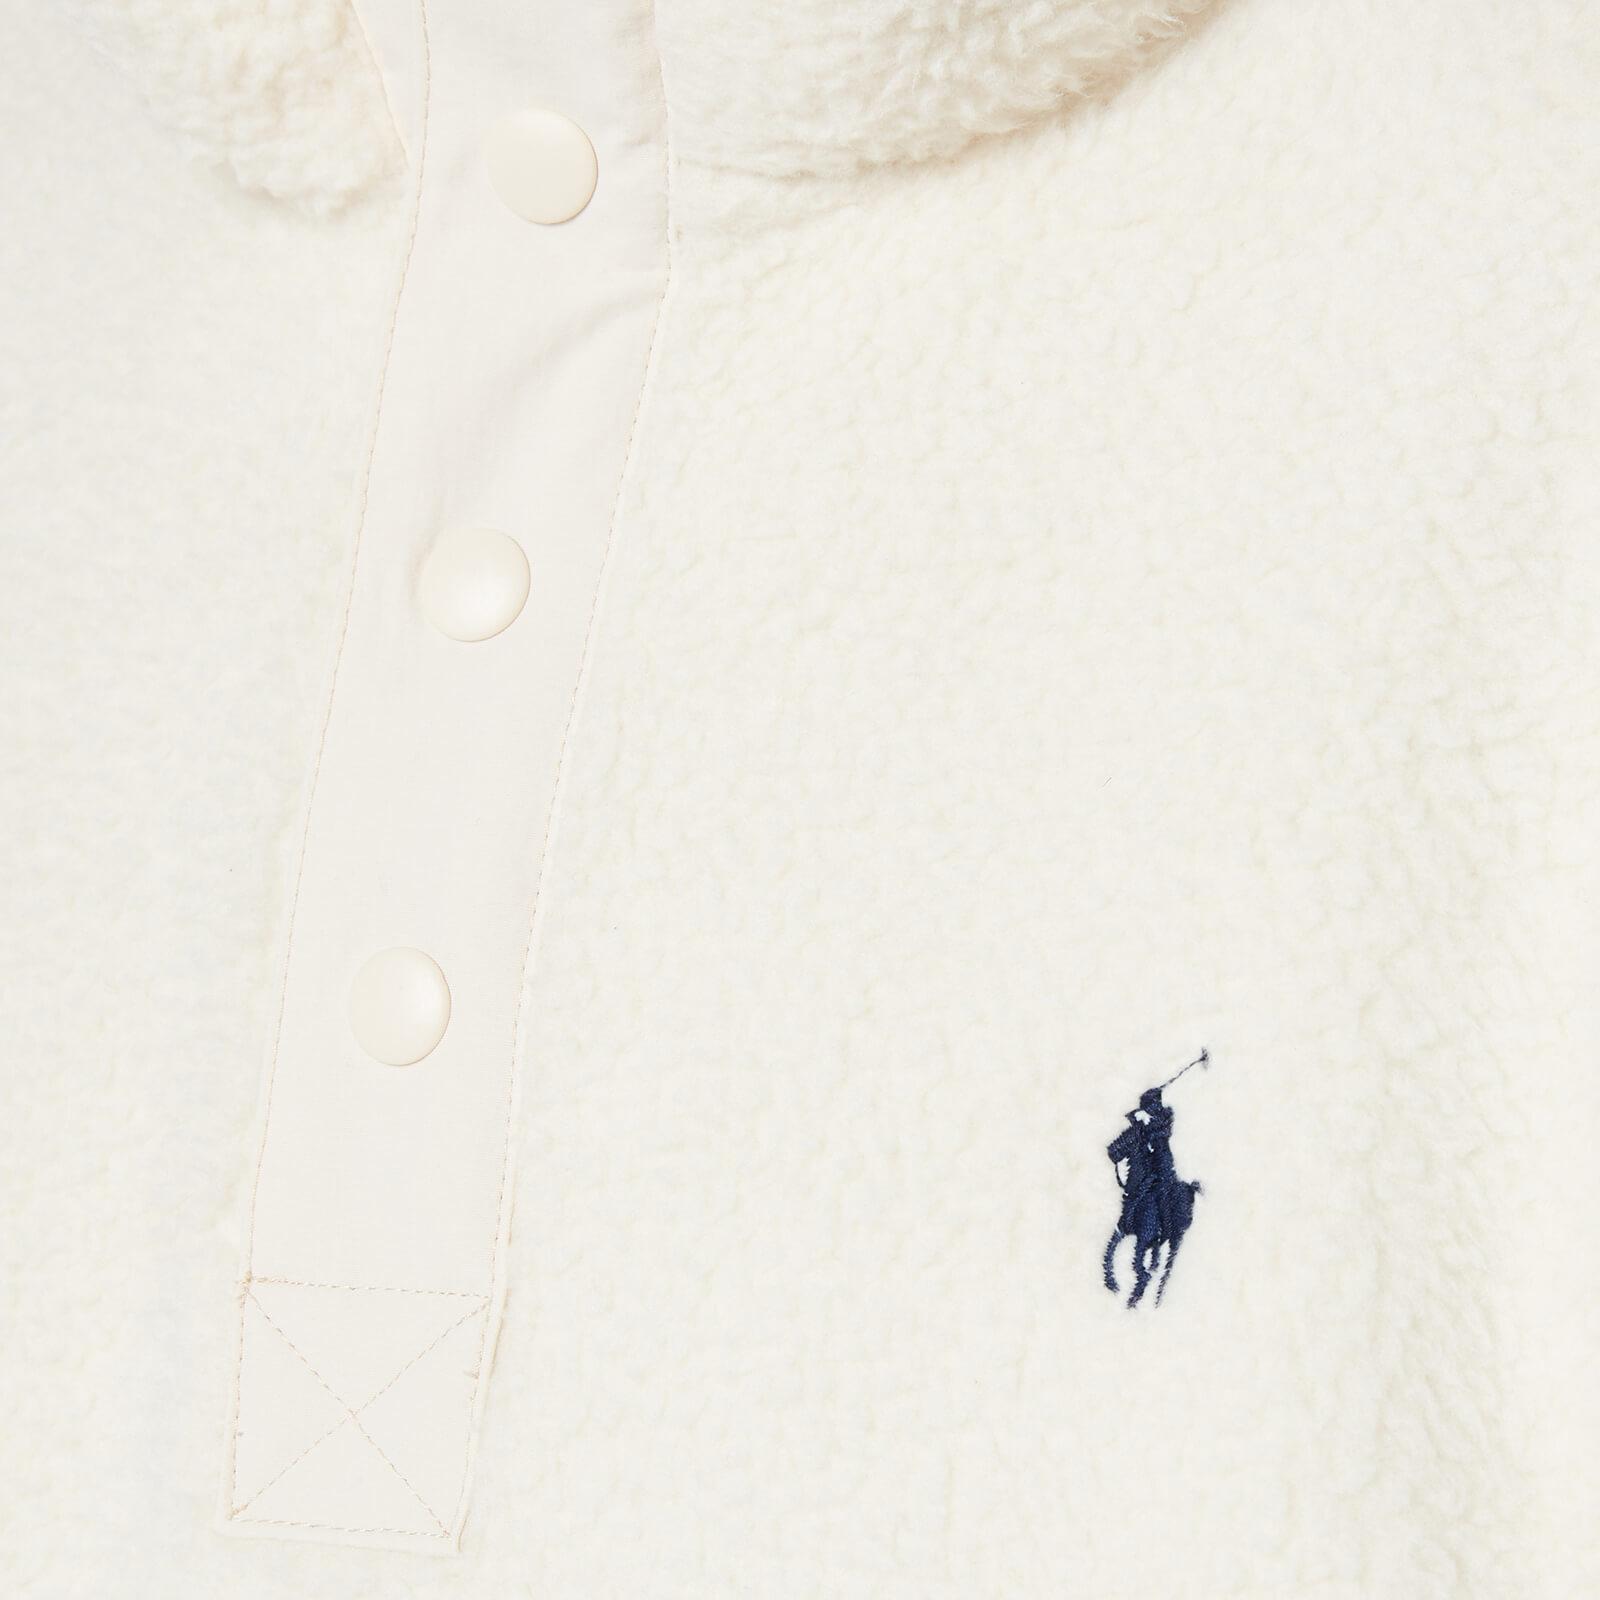 Polo Ralph Lauren player logo vintage fleece button neck sweatshirt in  winter cream